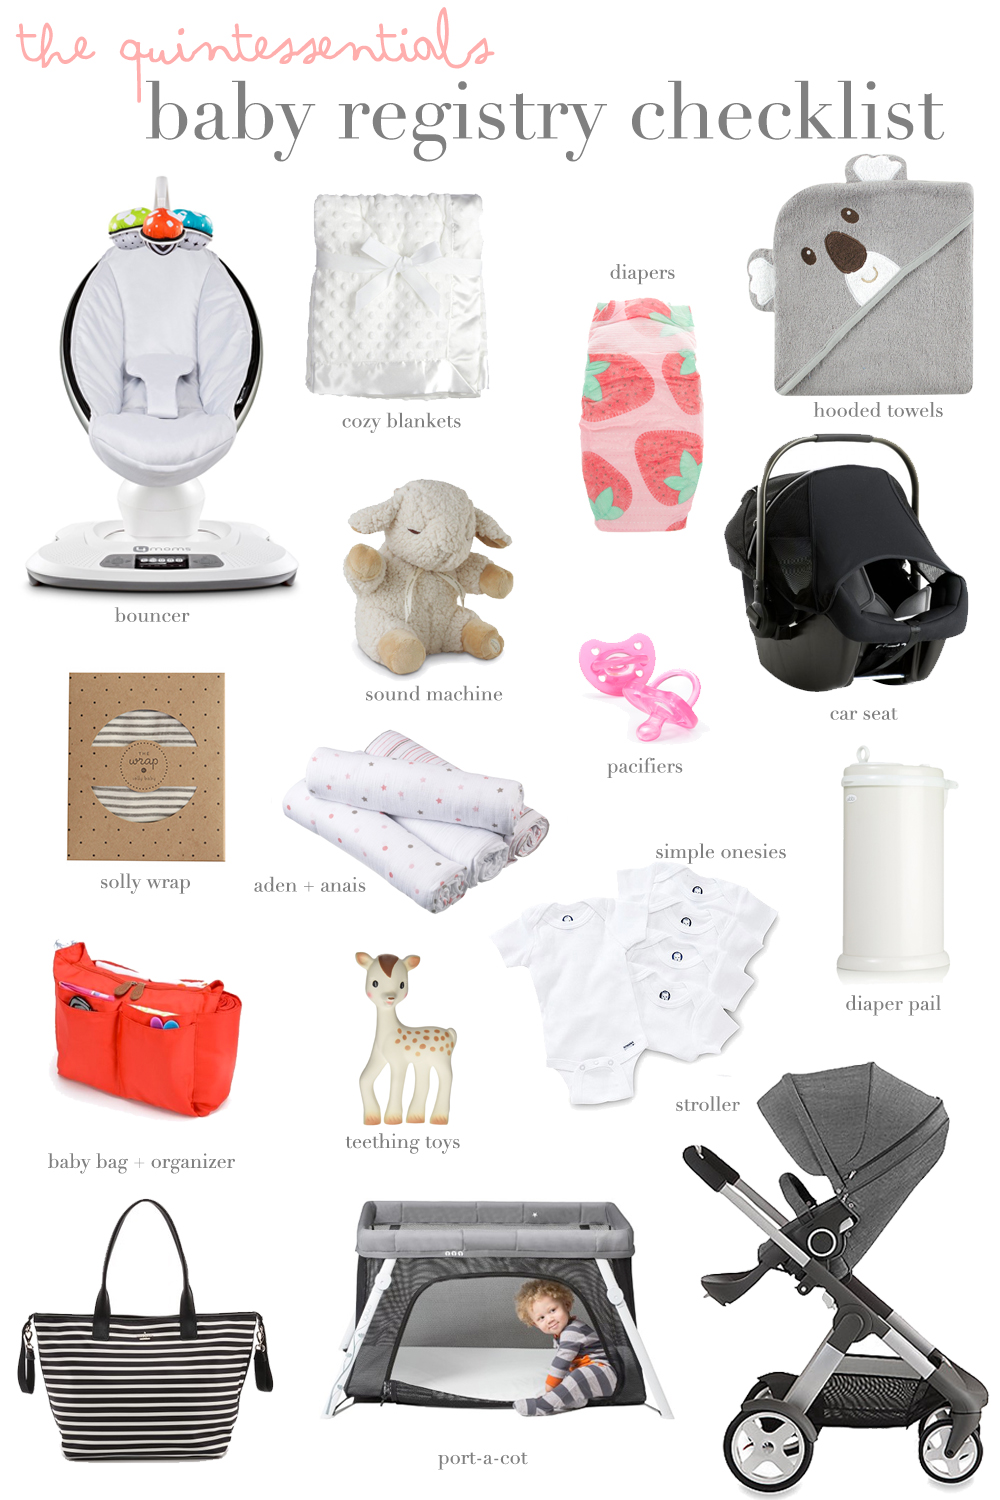 hospital bag checklist  basic mama necessities - Showit Blog